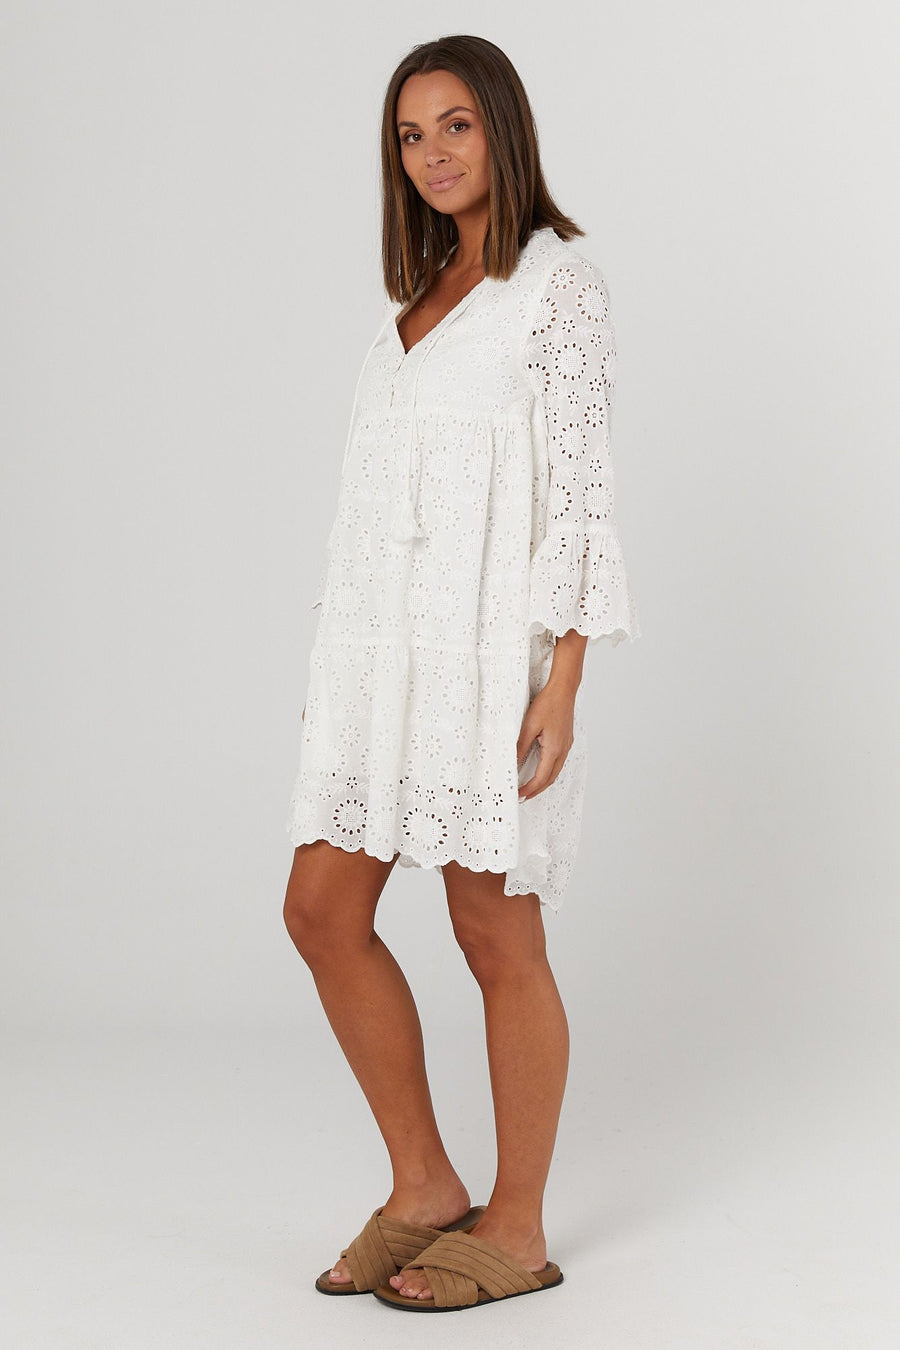 Sardinia Dress (White) - FINAL SALE